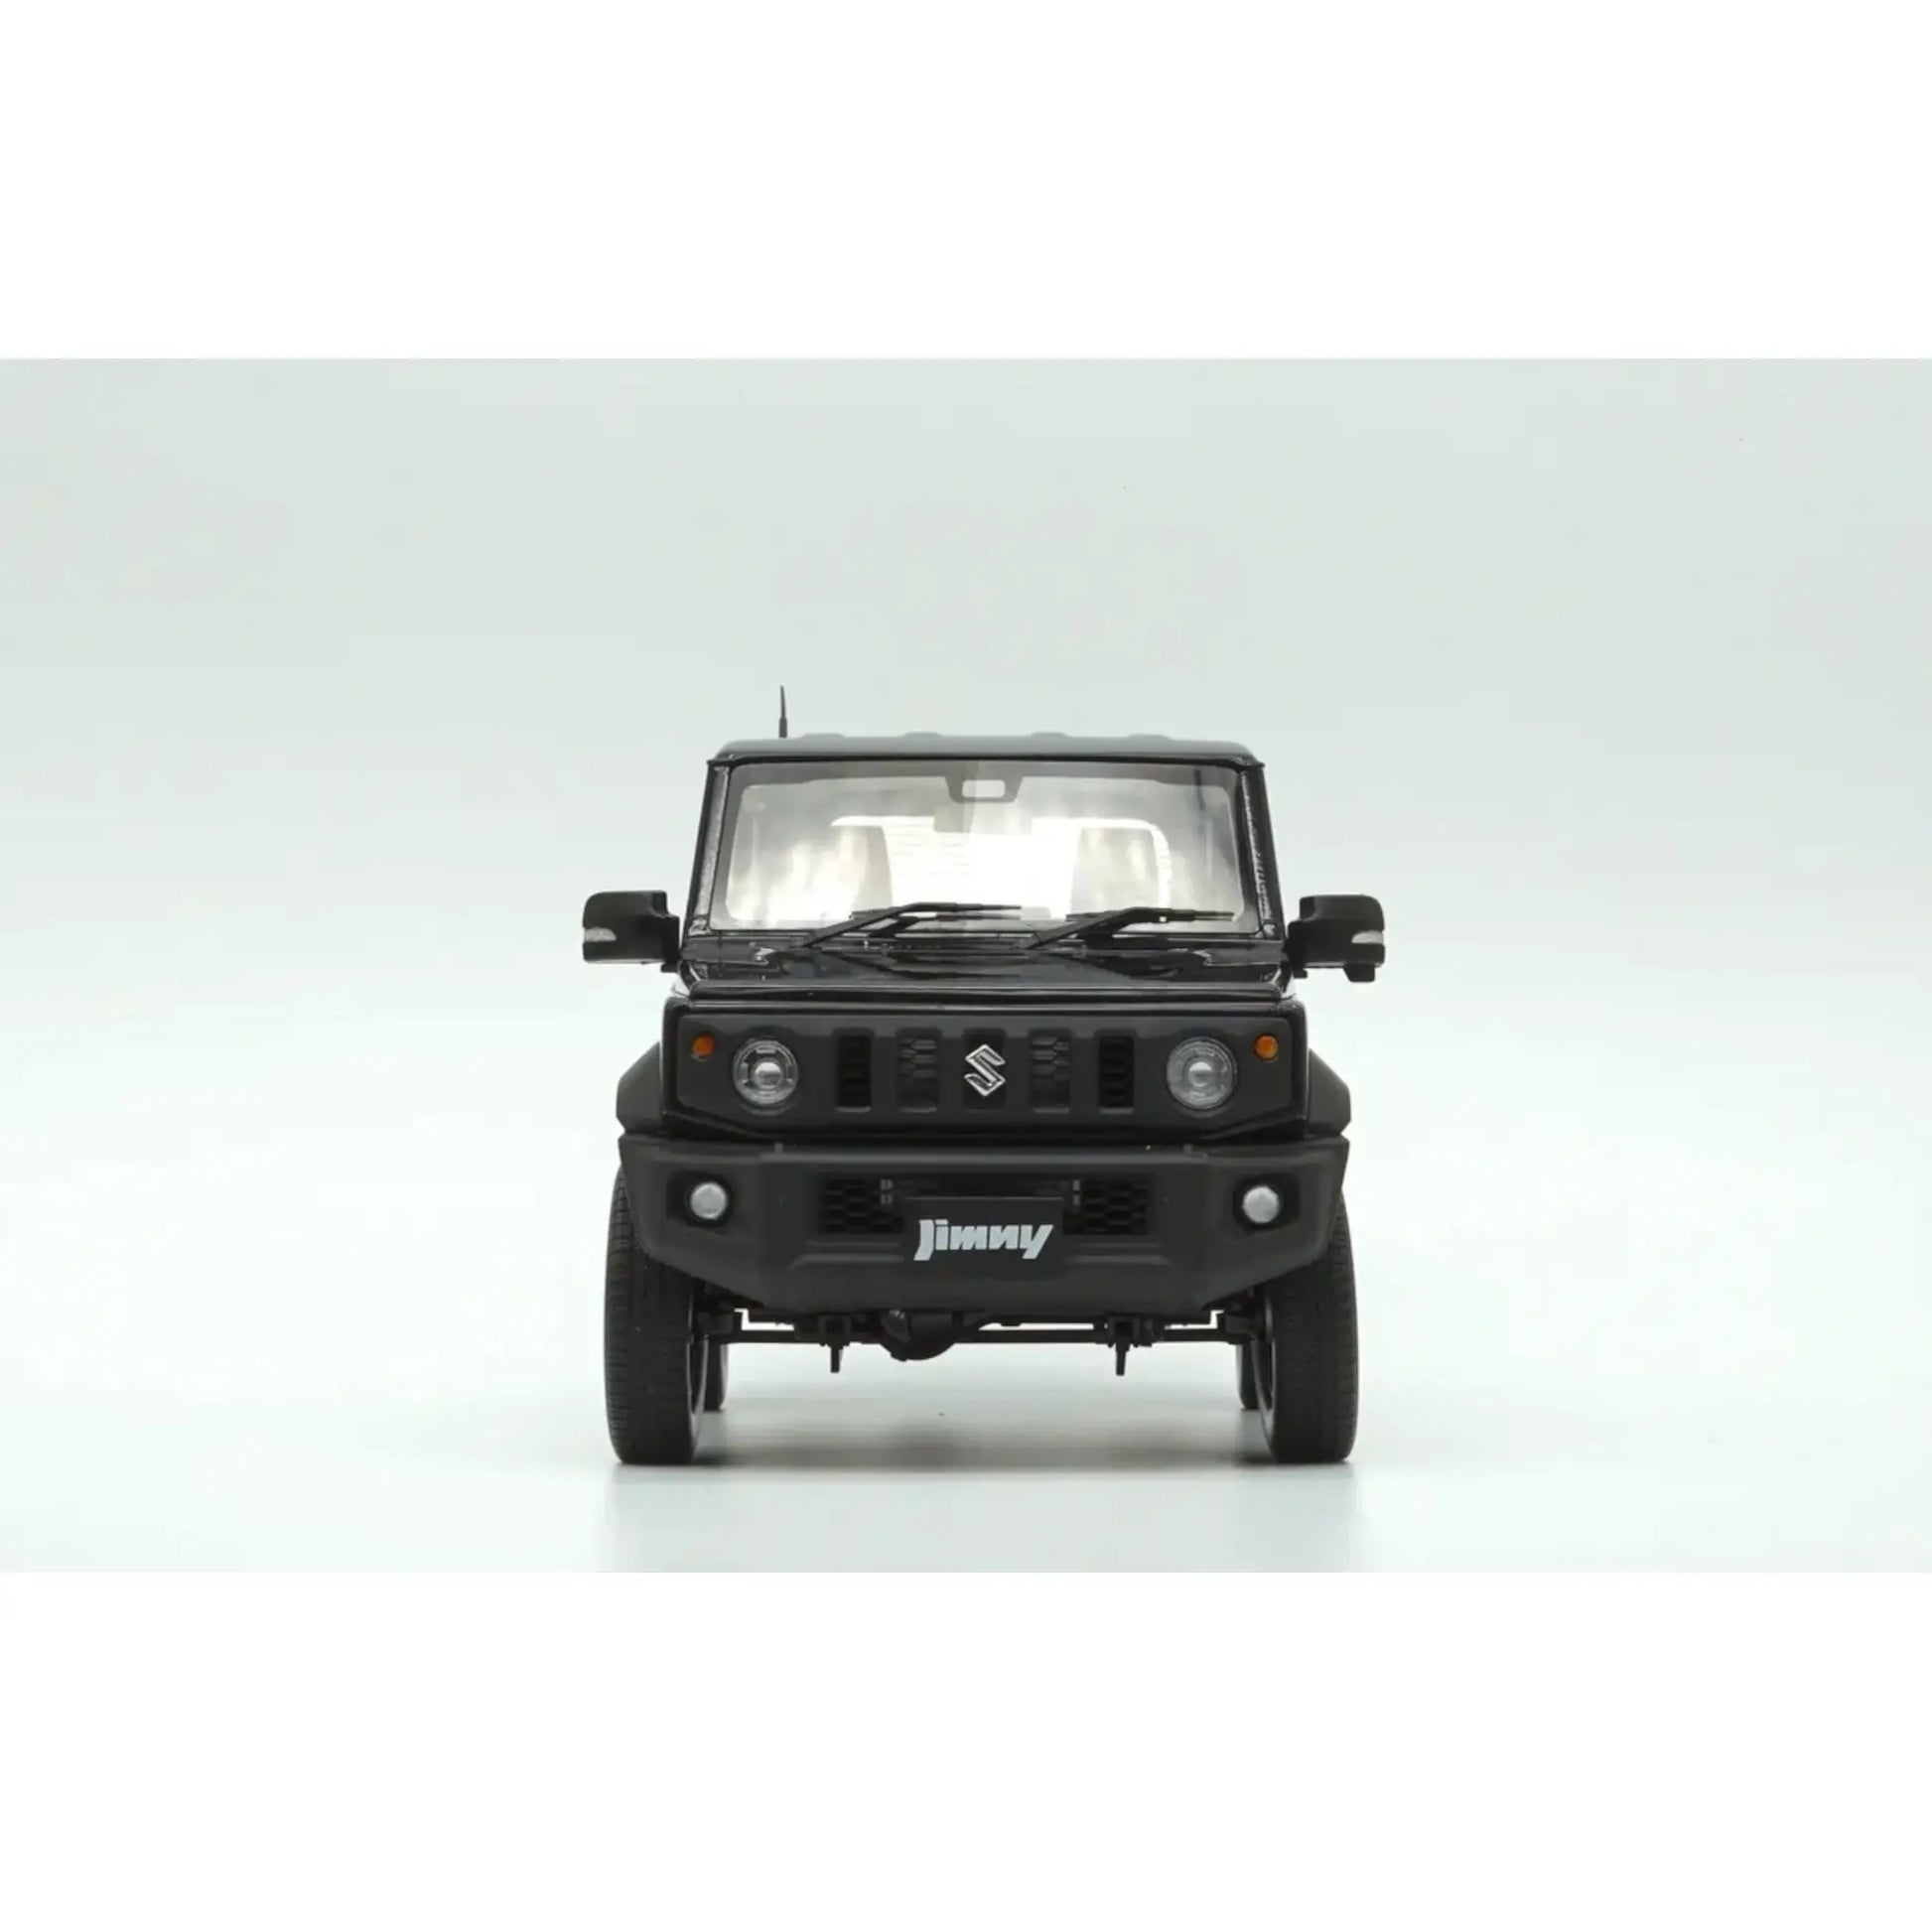 Suzuki Jimny JB74 LHD 2018 Black with Openings Parts BM Creations 1/18 | Motors Miniatures